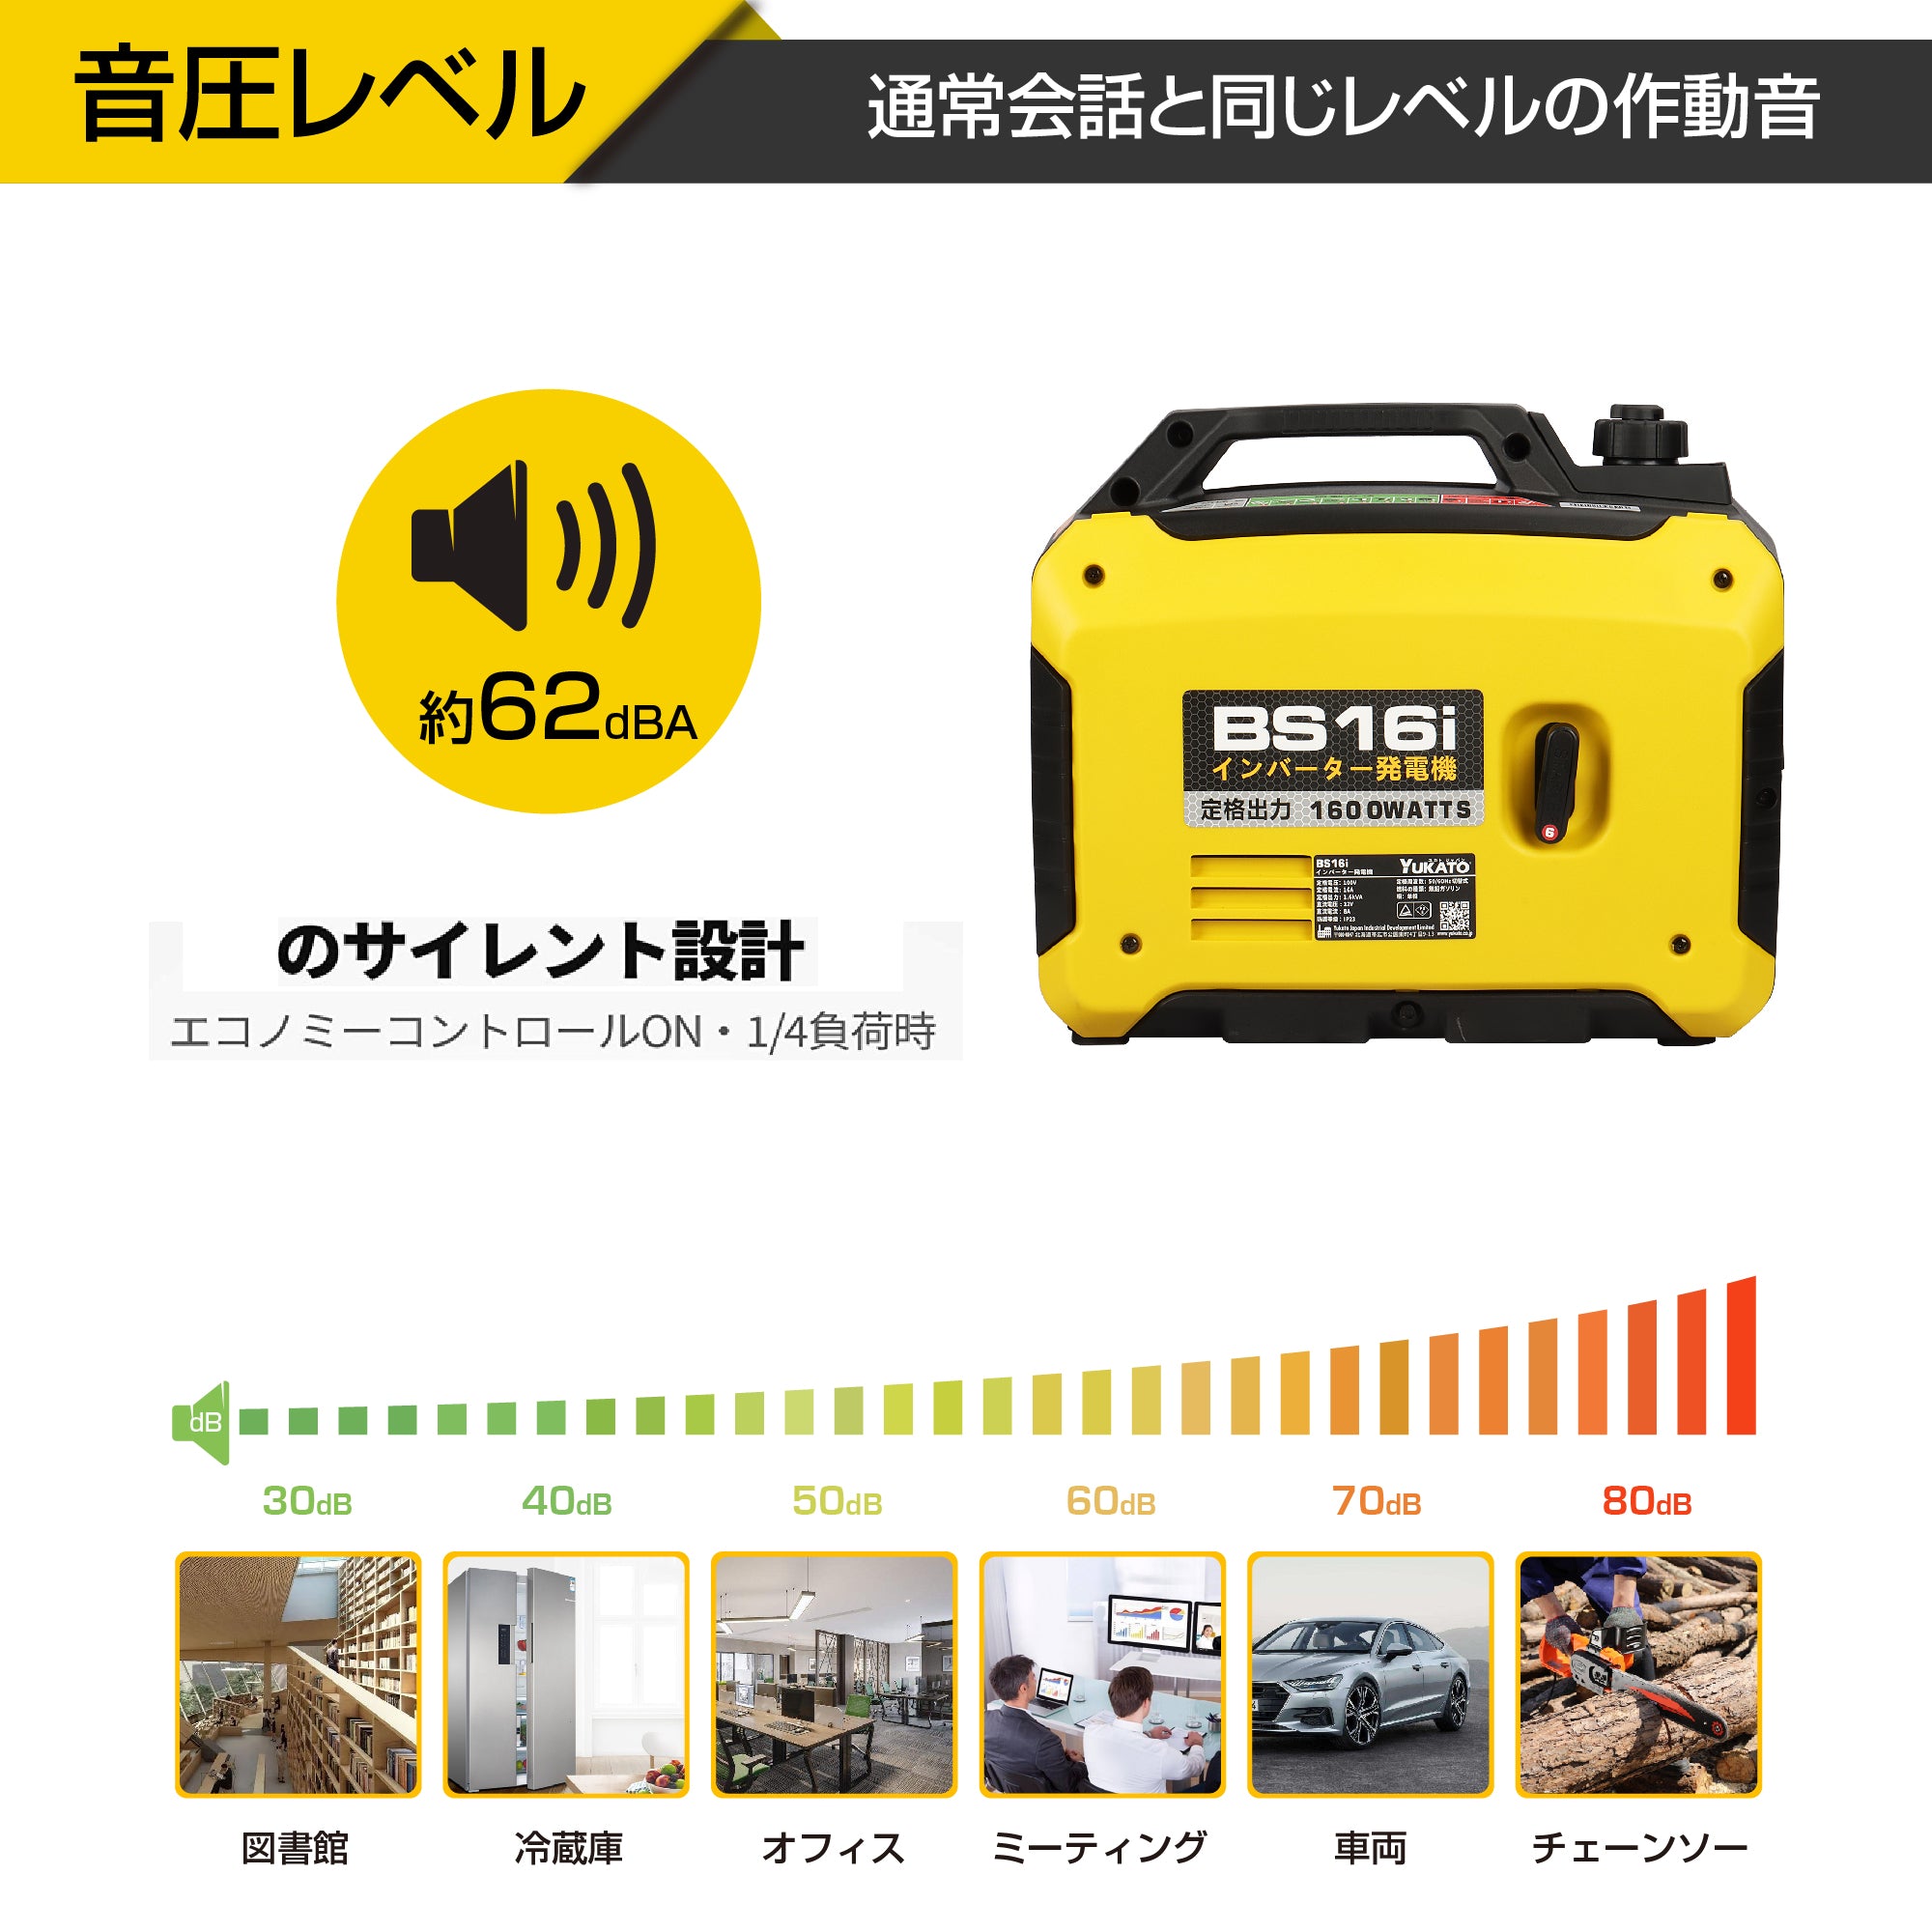 YUKATO BS16i インバーター発電機 1600W – YUKATOジャパン公式サイト